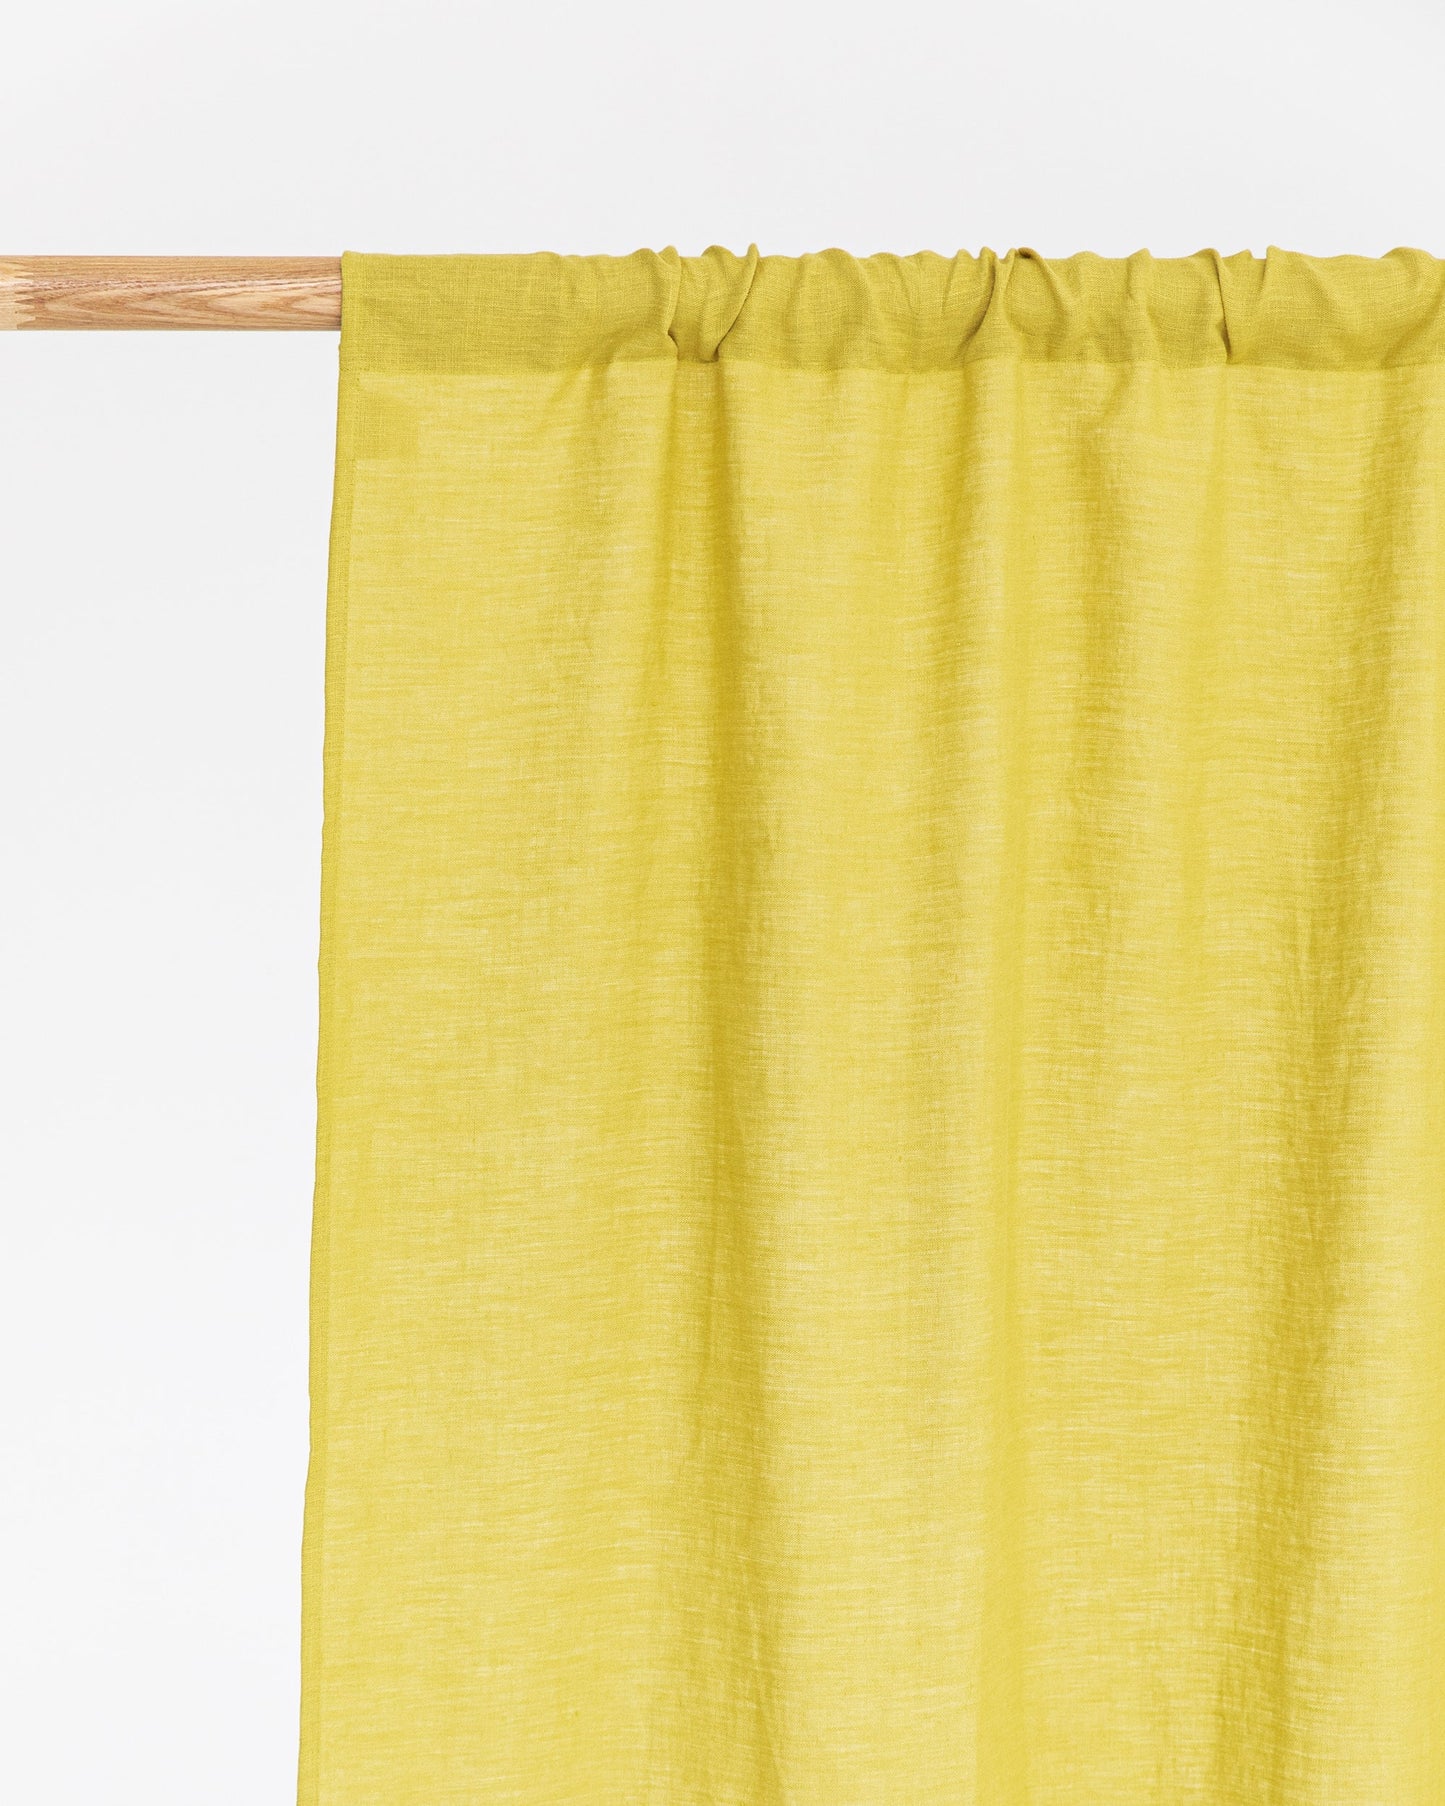 Custom size rod pocket linen curtain panel (1 pcs) in Moss yellow - MagicLinen